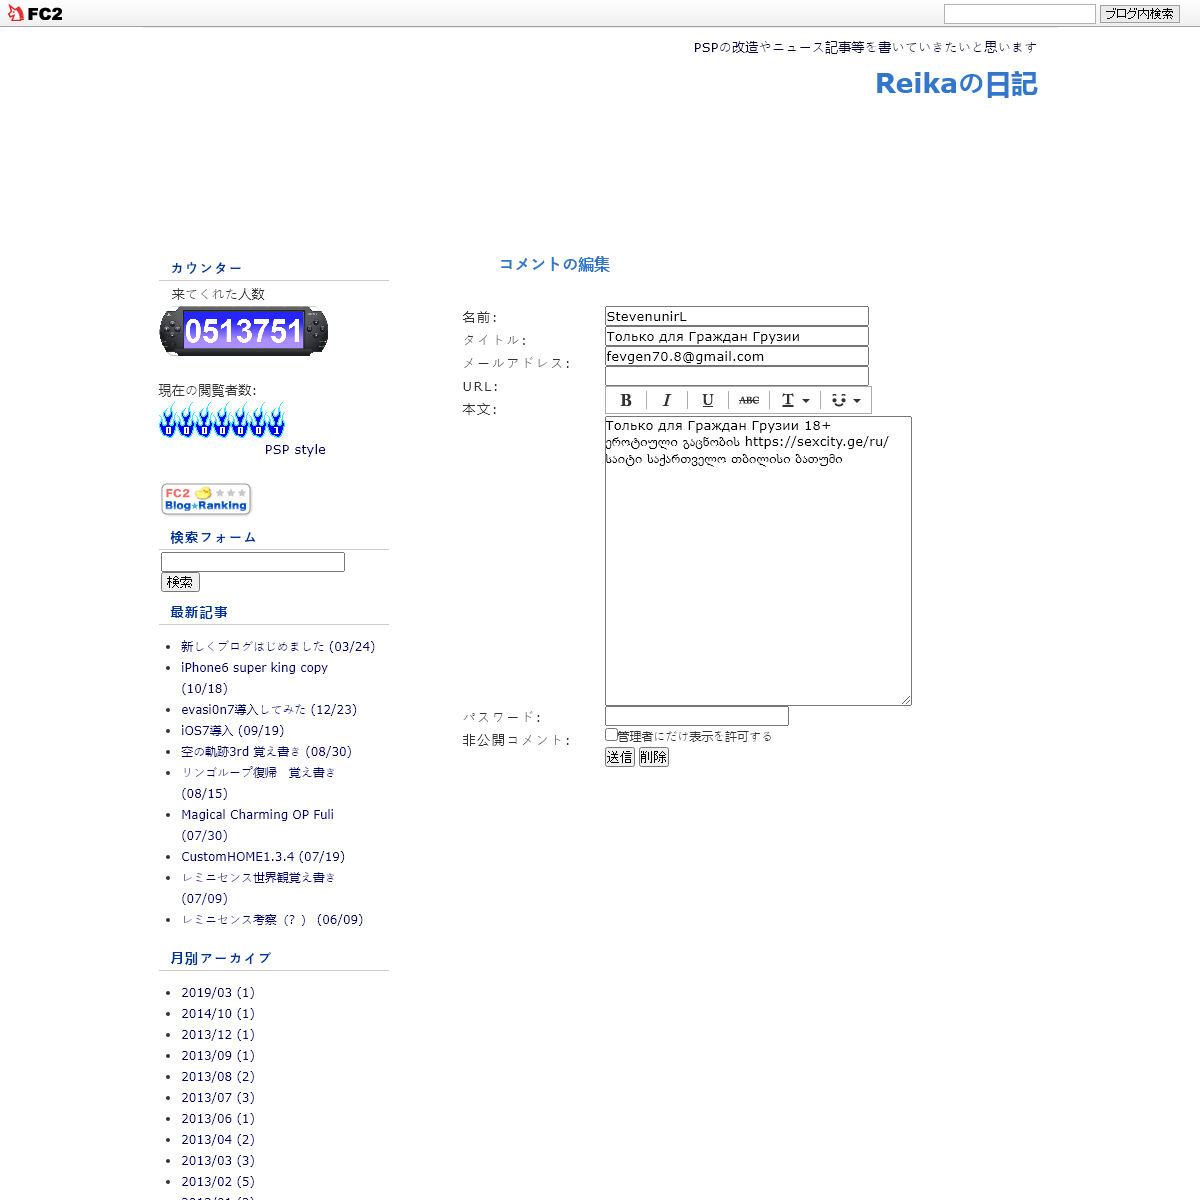 A complete backup of http://reikandiaryo.blog.fc2.com/?mode=edit&rno=1410